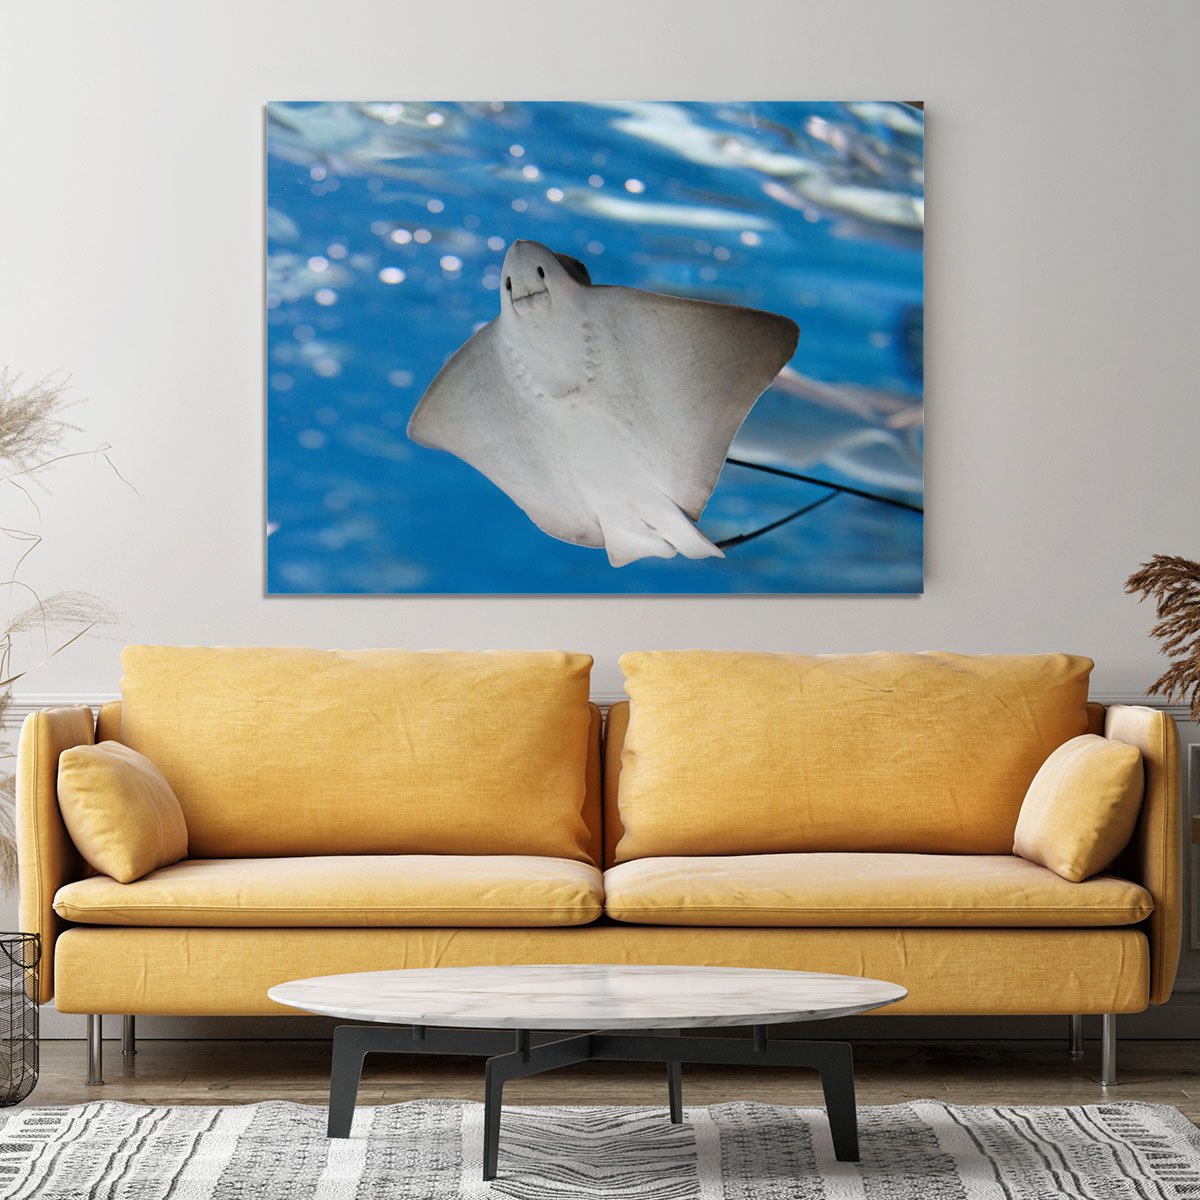 Sea stingray and marine life Canvas Print or Poster